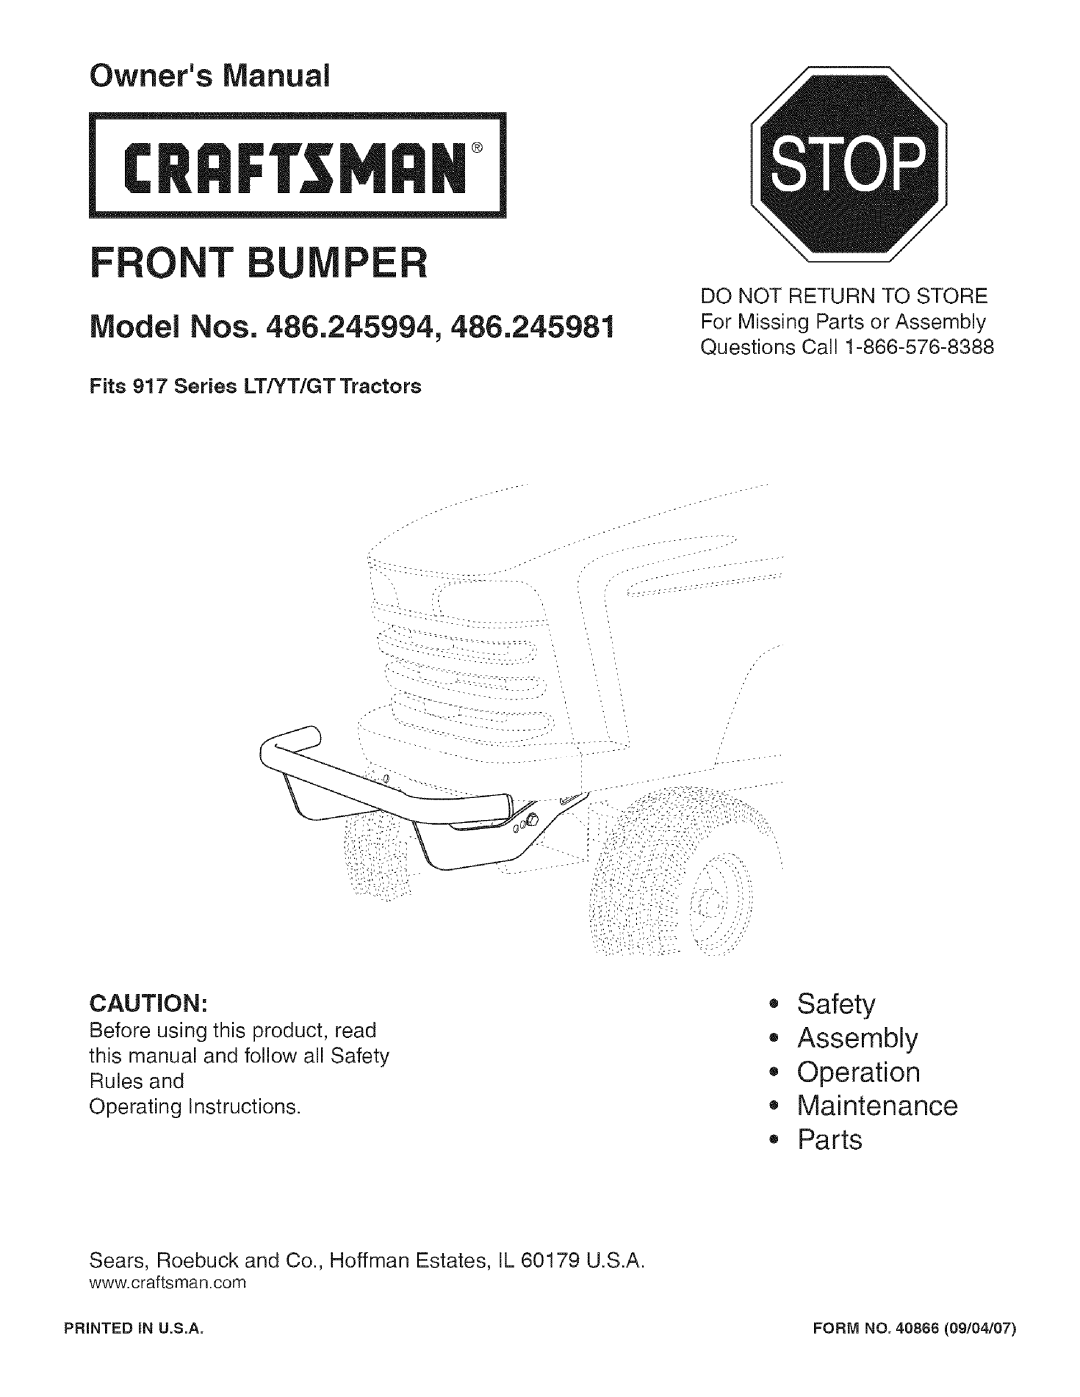 Craftsman 486.245981, 486.245994 owner manual Safety Assembly Operation Maintenance Parts, CRRFr. NRN, Front, Model Nos 